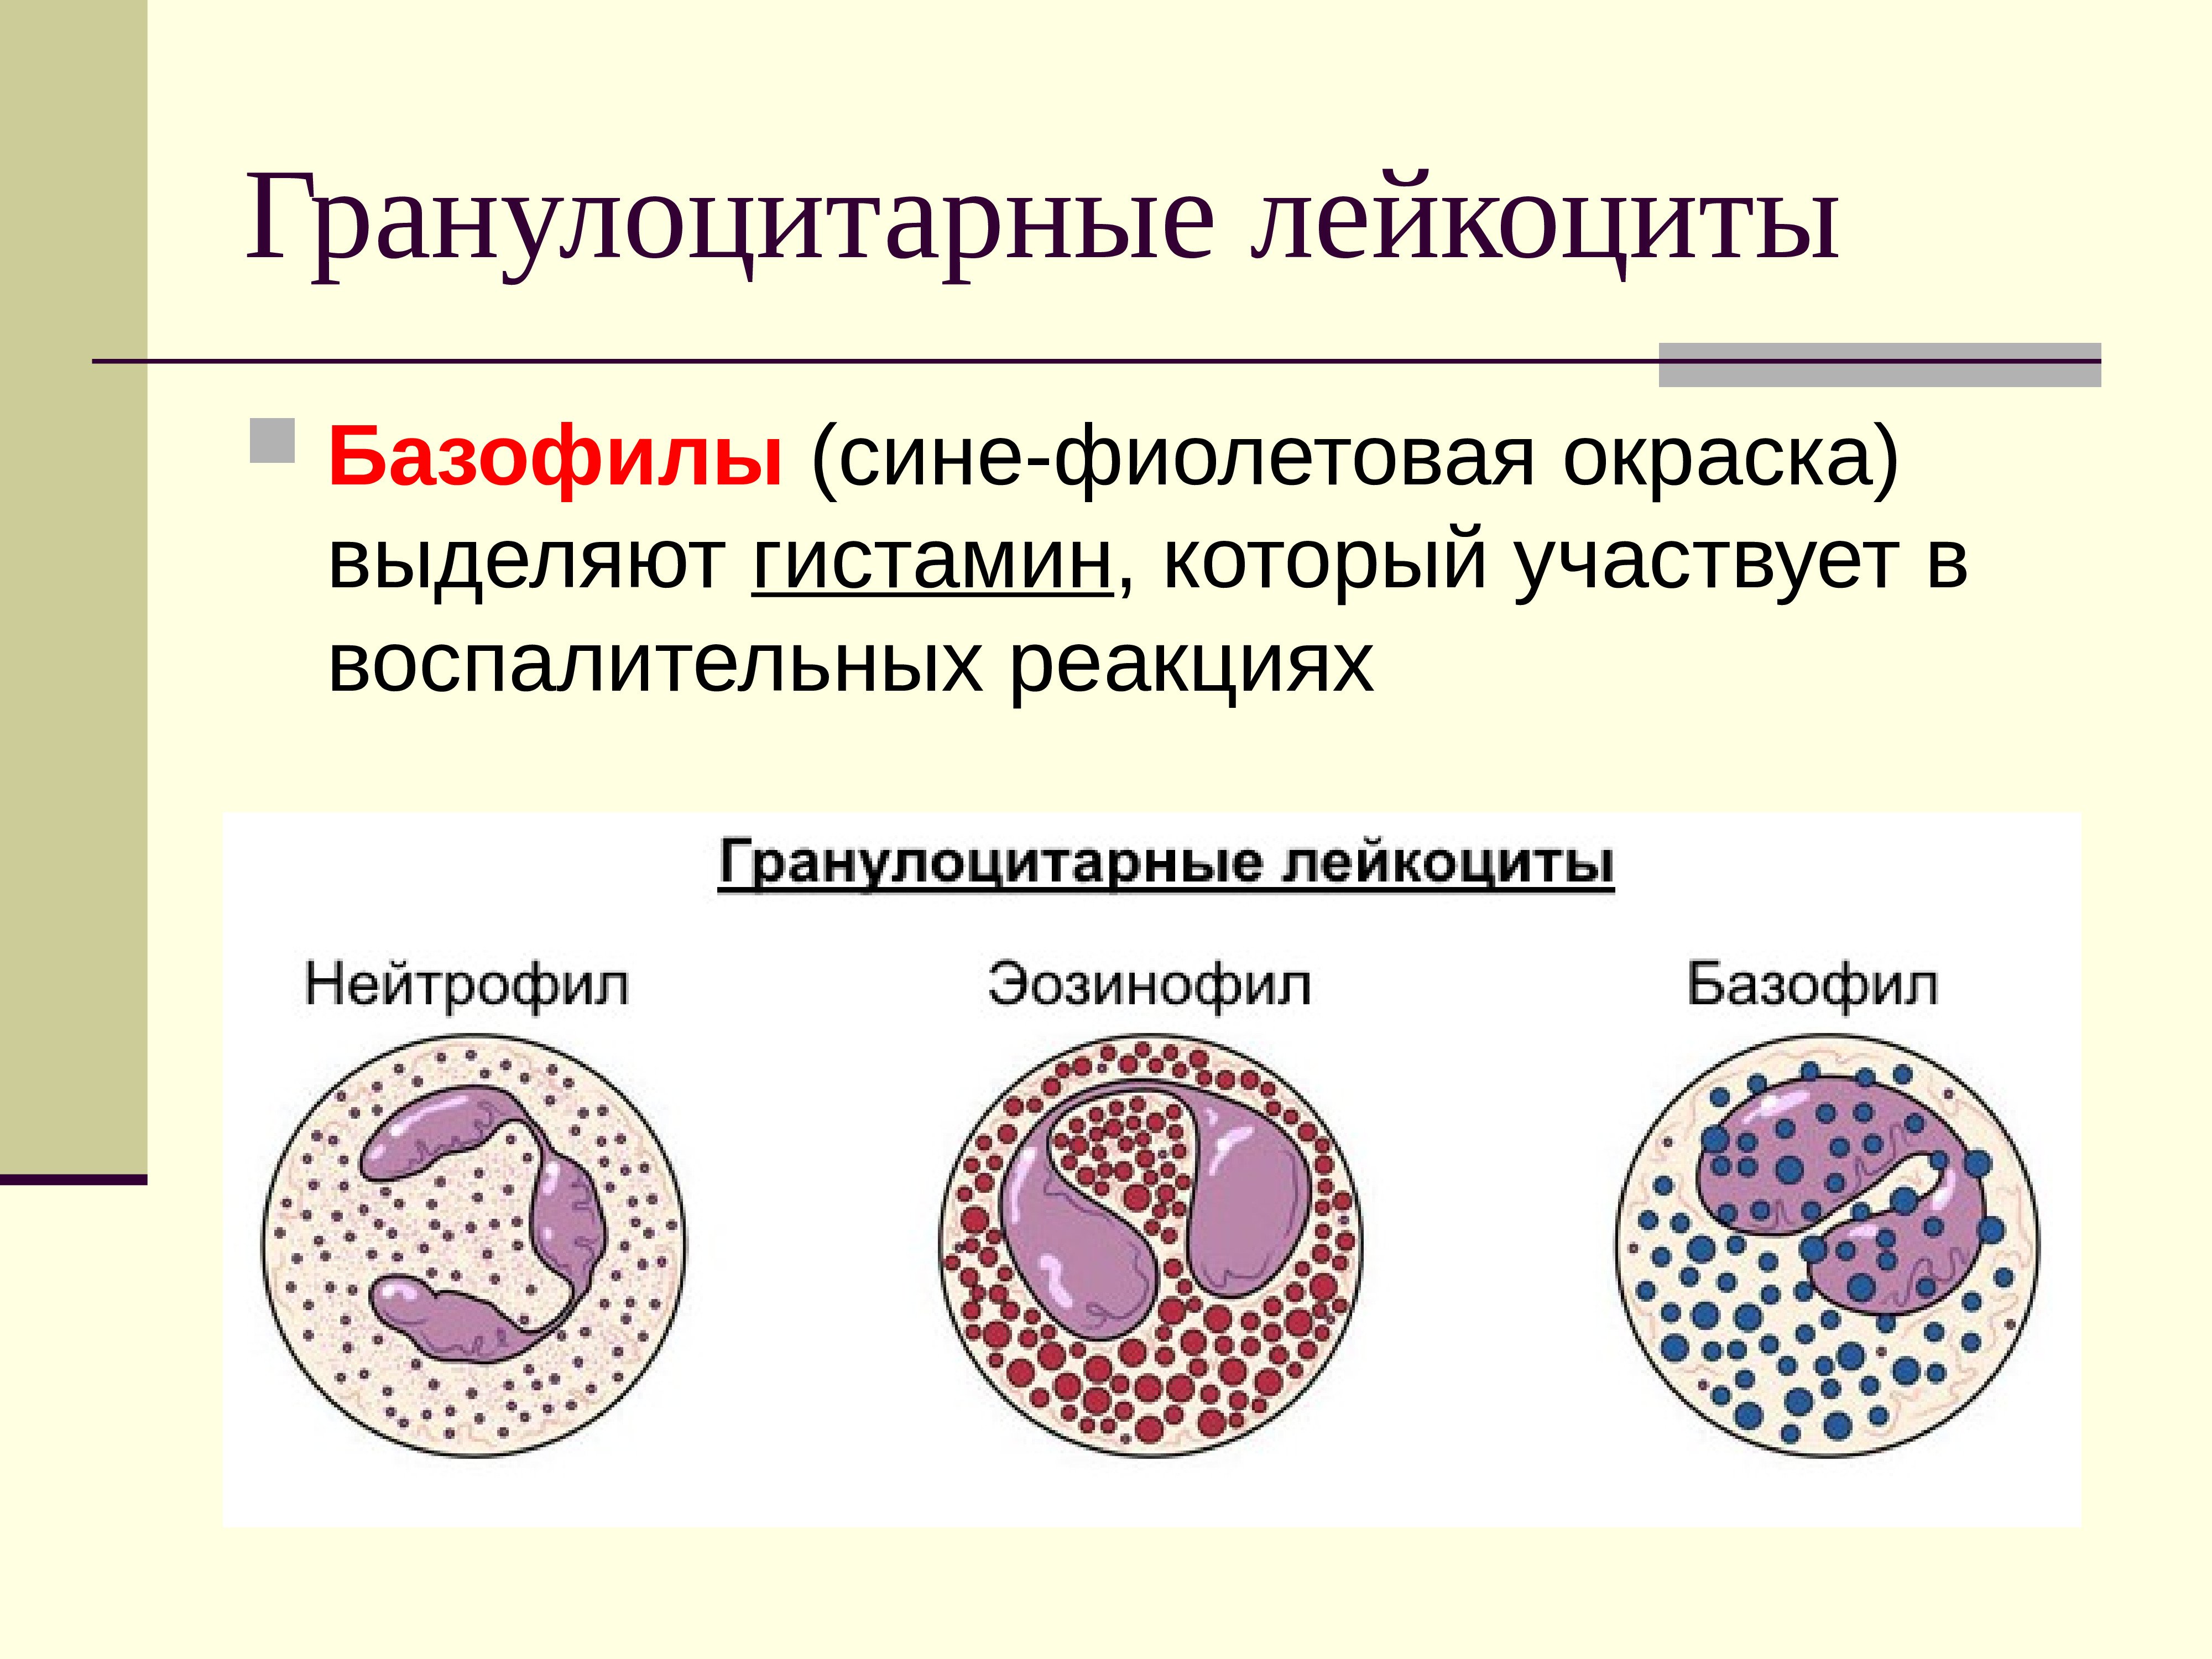 Лейкоциты нейтрофилы эозинофилы. Нейтрофилы базофилы и эозинофилы. Разновидности лейкоцитов. Клетки лейкоцитов. Лейкоциты гранулоциты и агранулоциты.